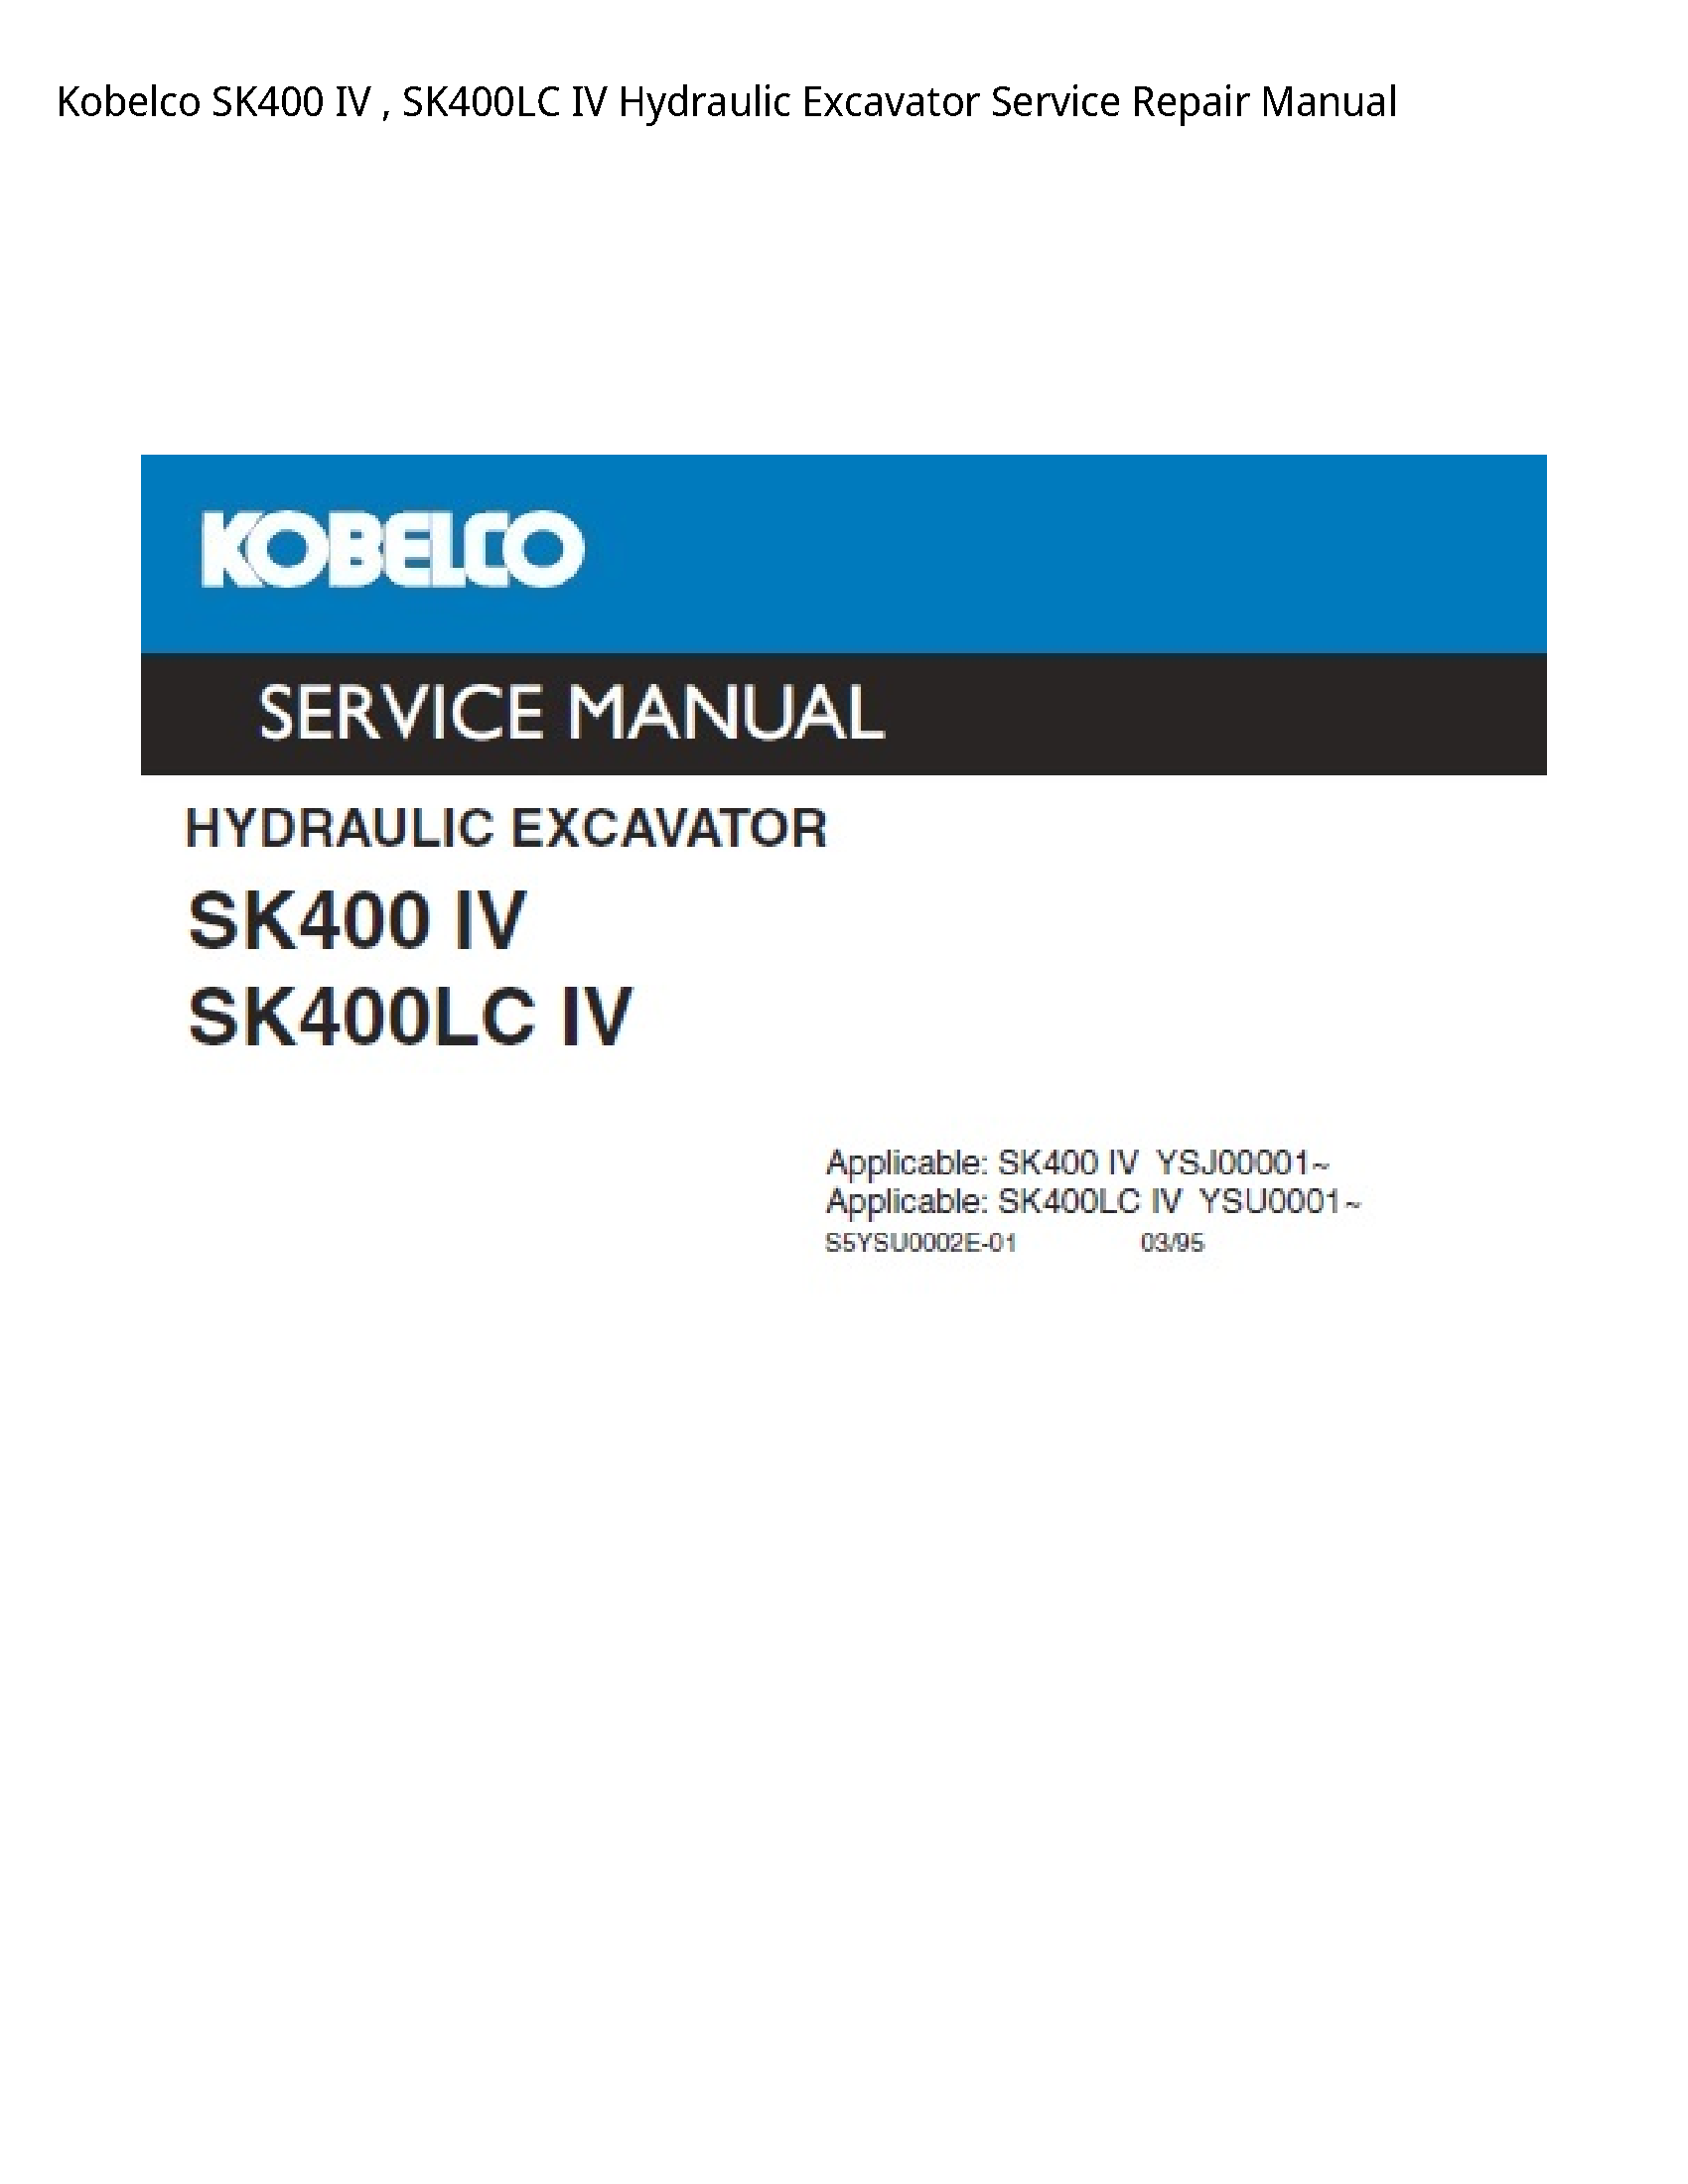 Kobelco SK400 IV IV Hydraulic Excavator manual